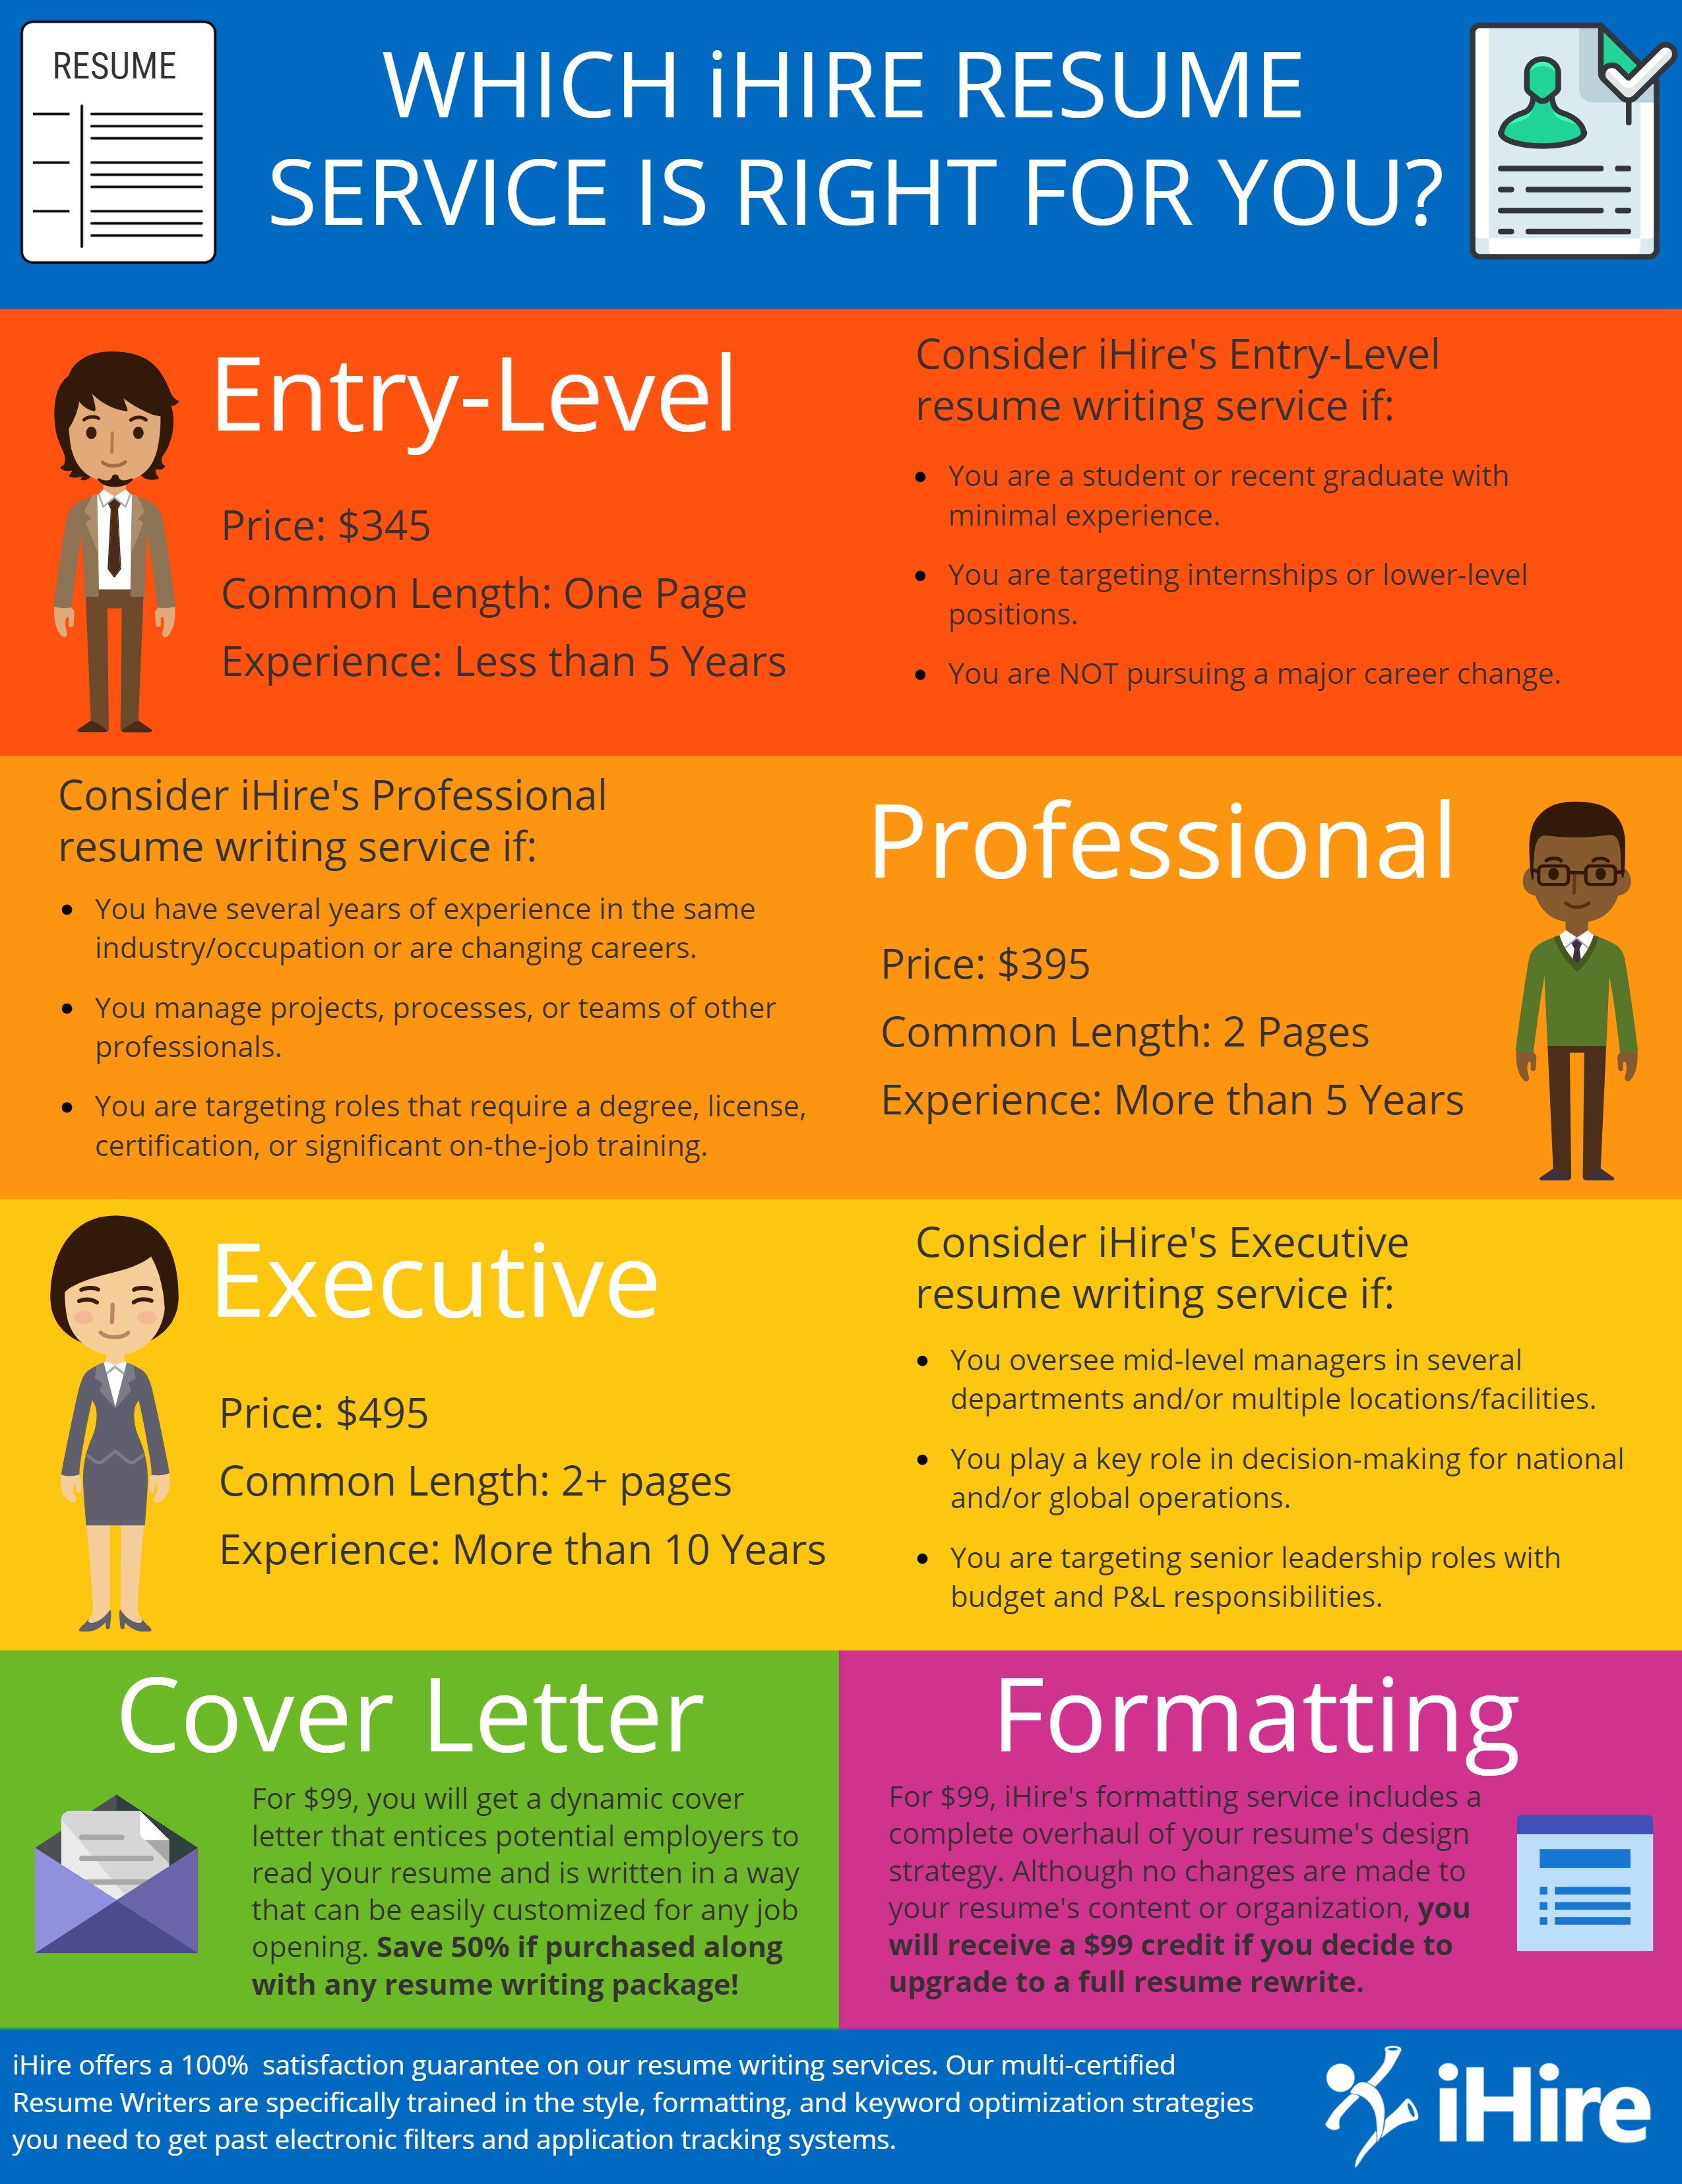 Professional resume writing services edmonton alberta